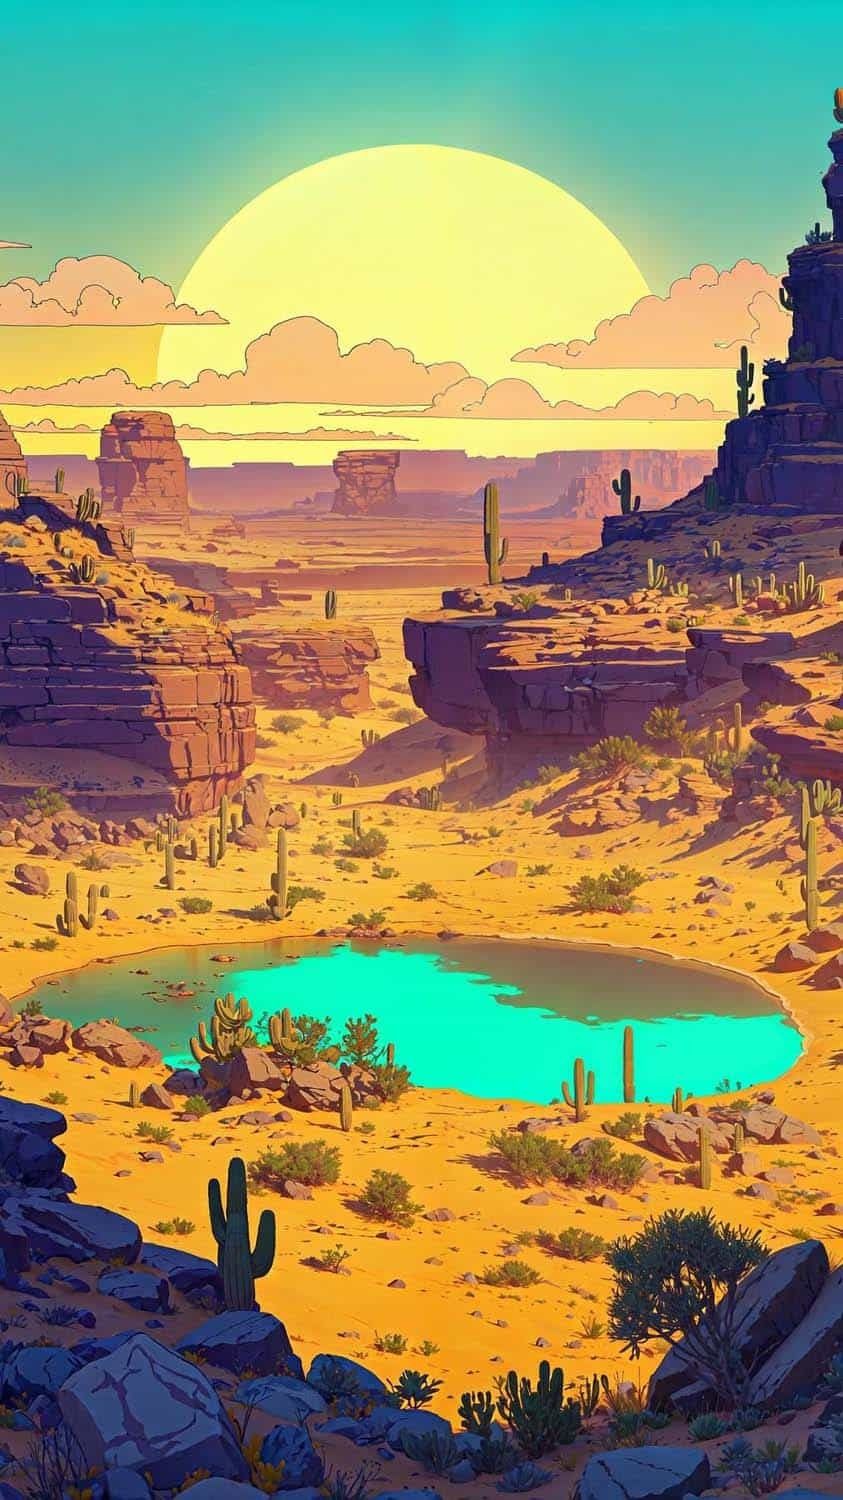 The Desert By sideygitart